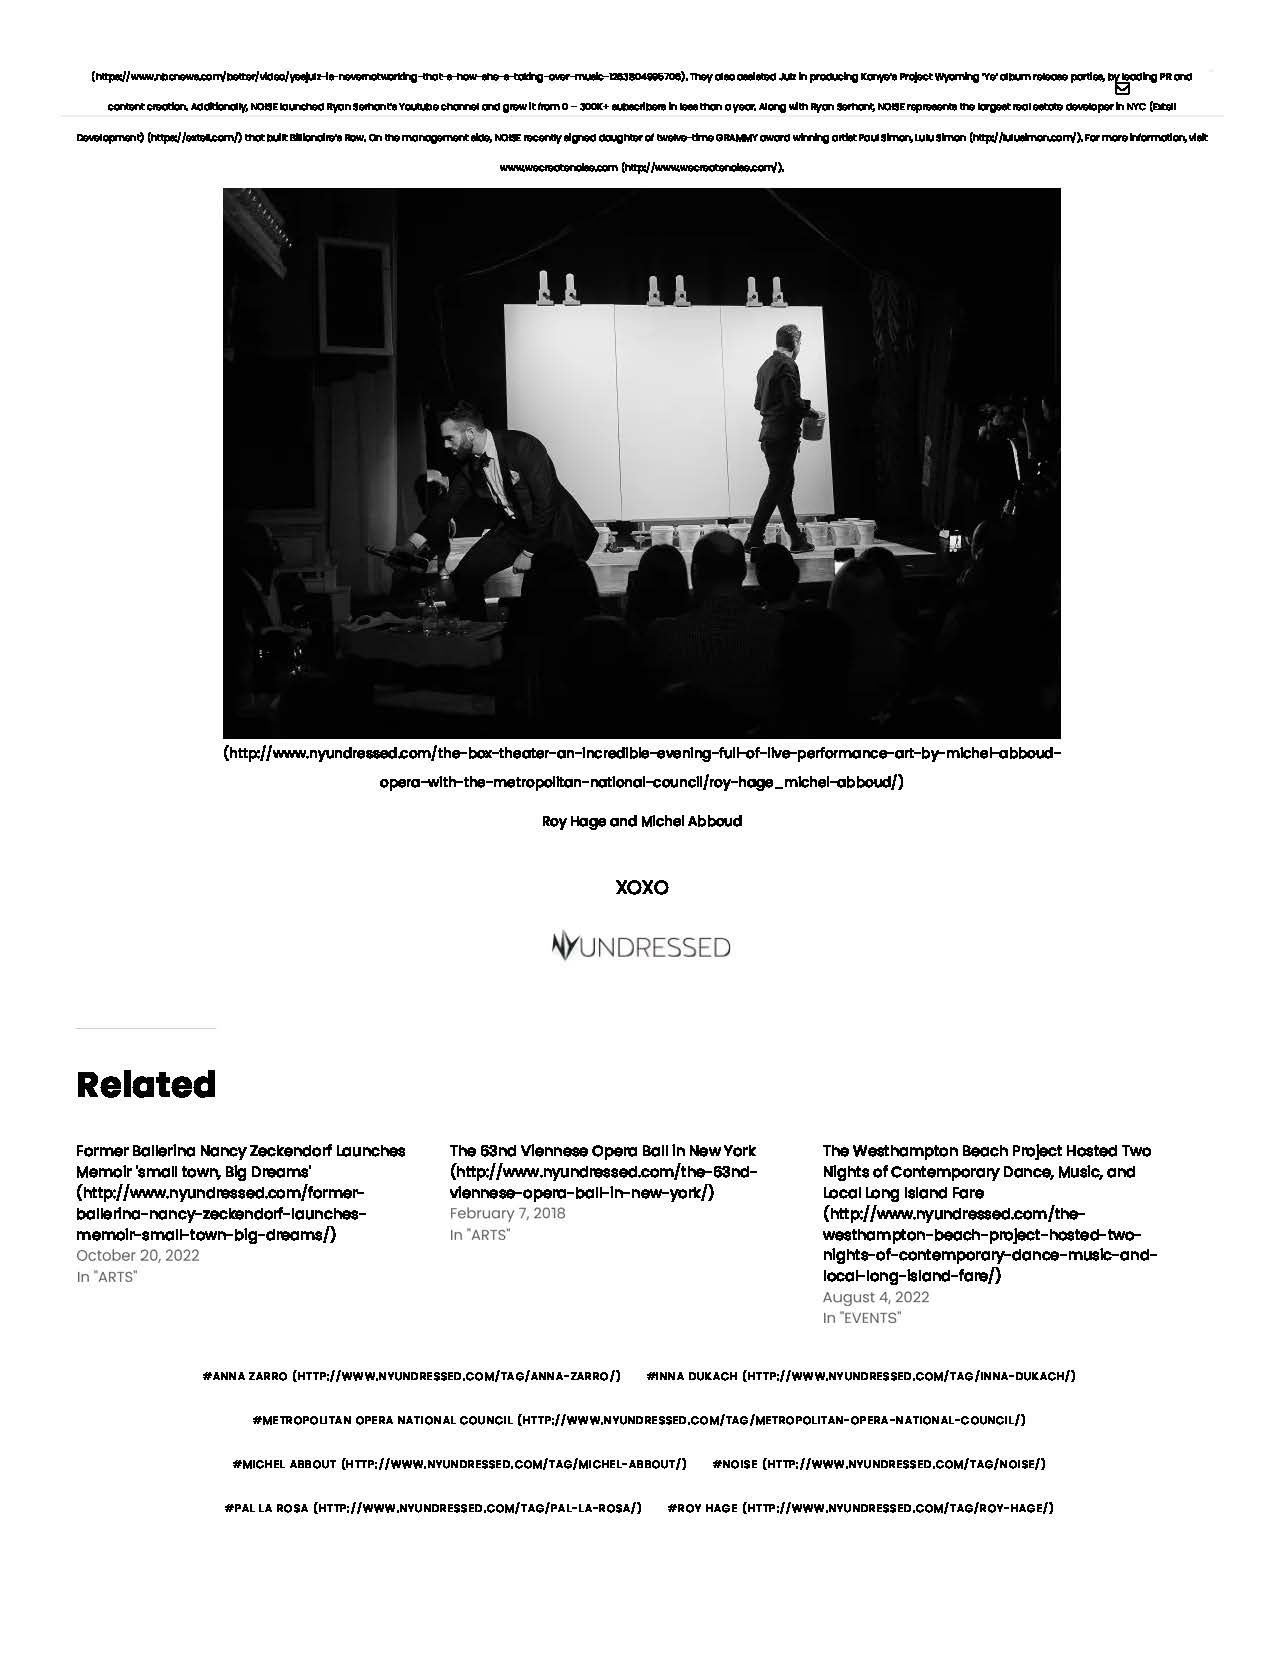 Michel Abboud - SOMA - NY Undressed - PRESS 2019 -5.jpg